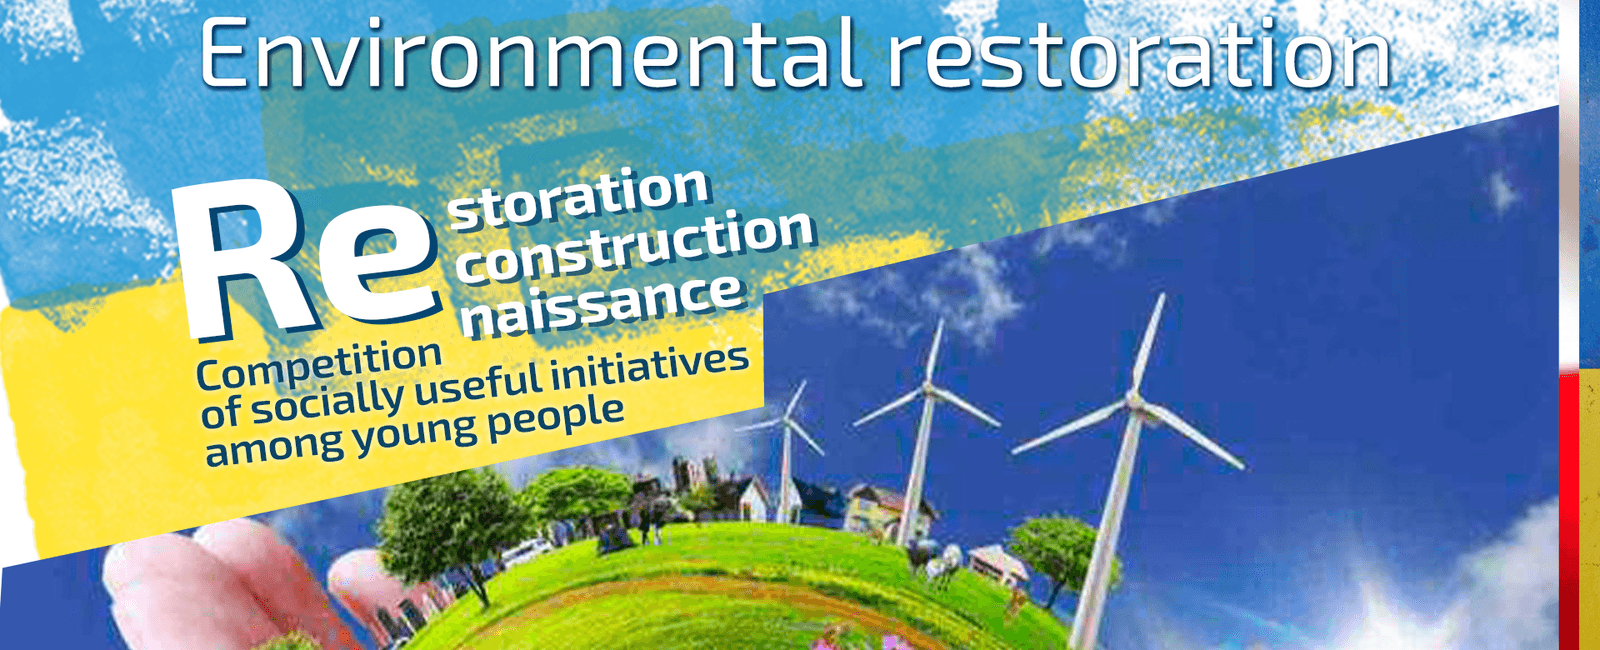 Section 2. Environmental restoration